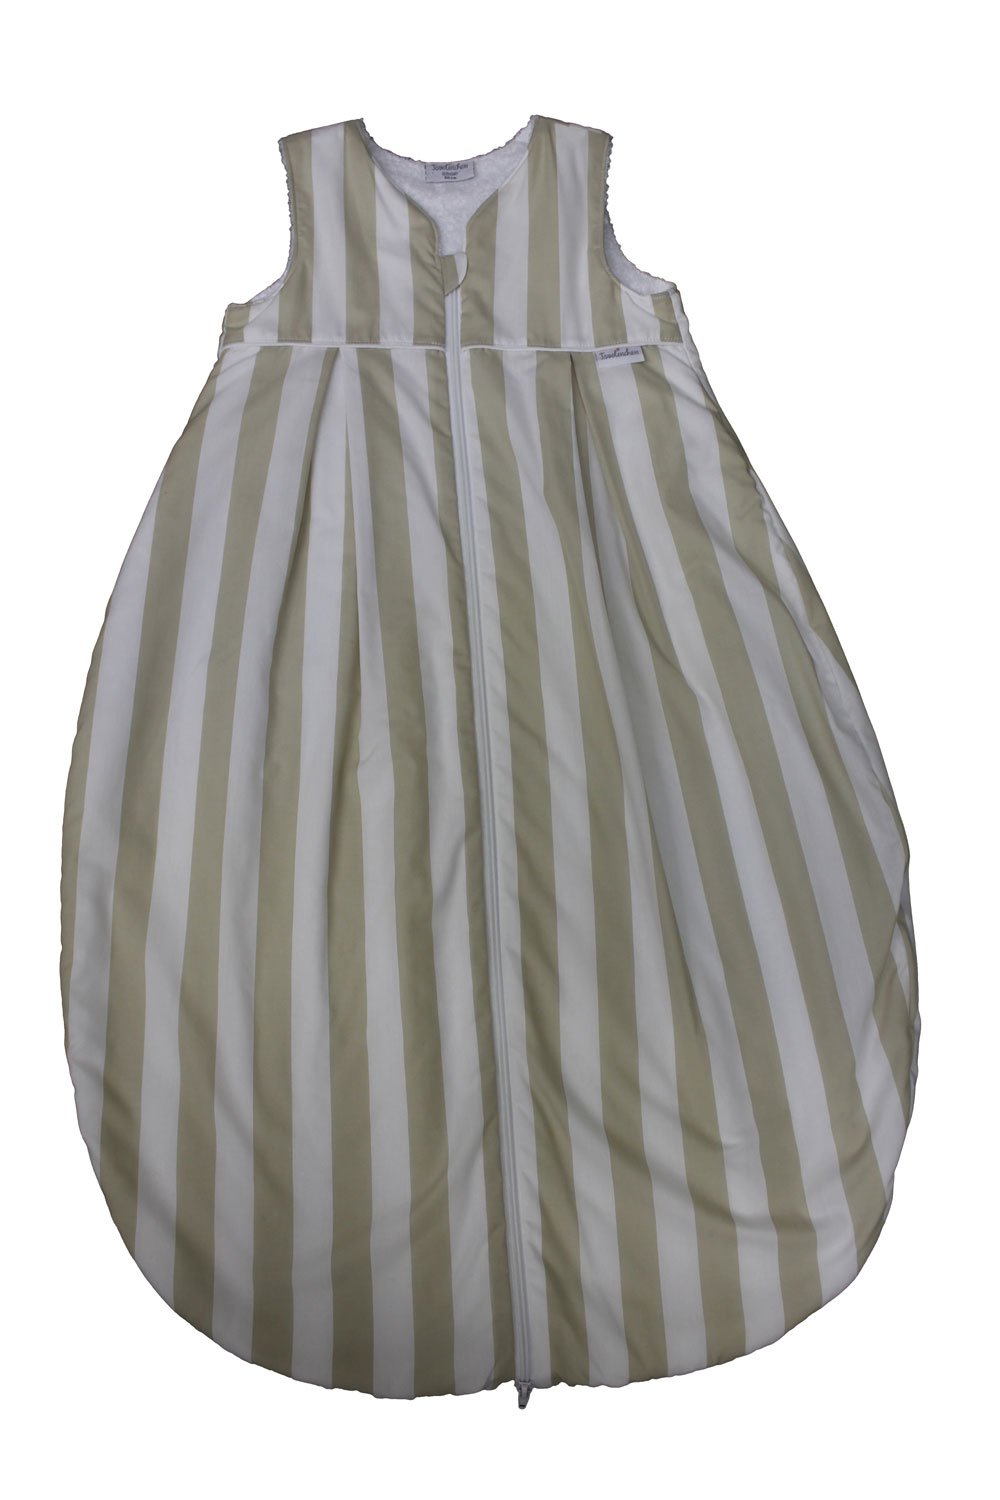 Tavolinchen 35/105-129-70 Terry Block Stripes Sleeping Bag 90 cm Beige